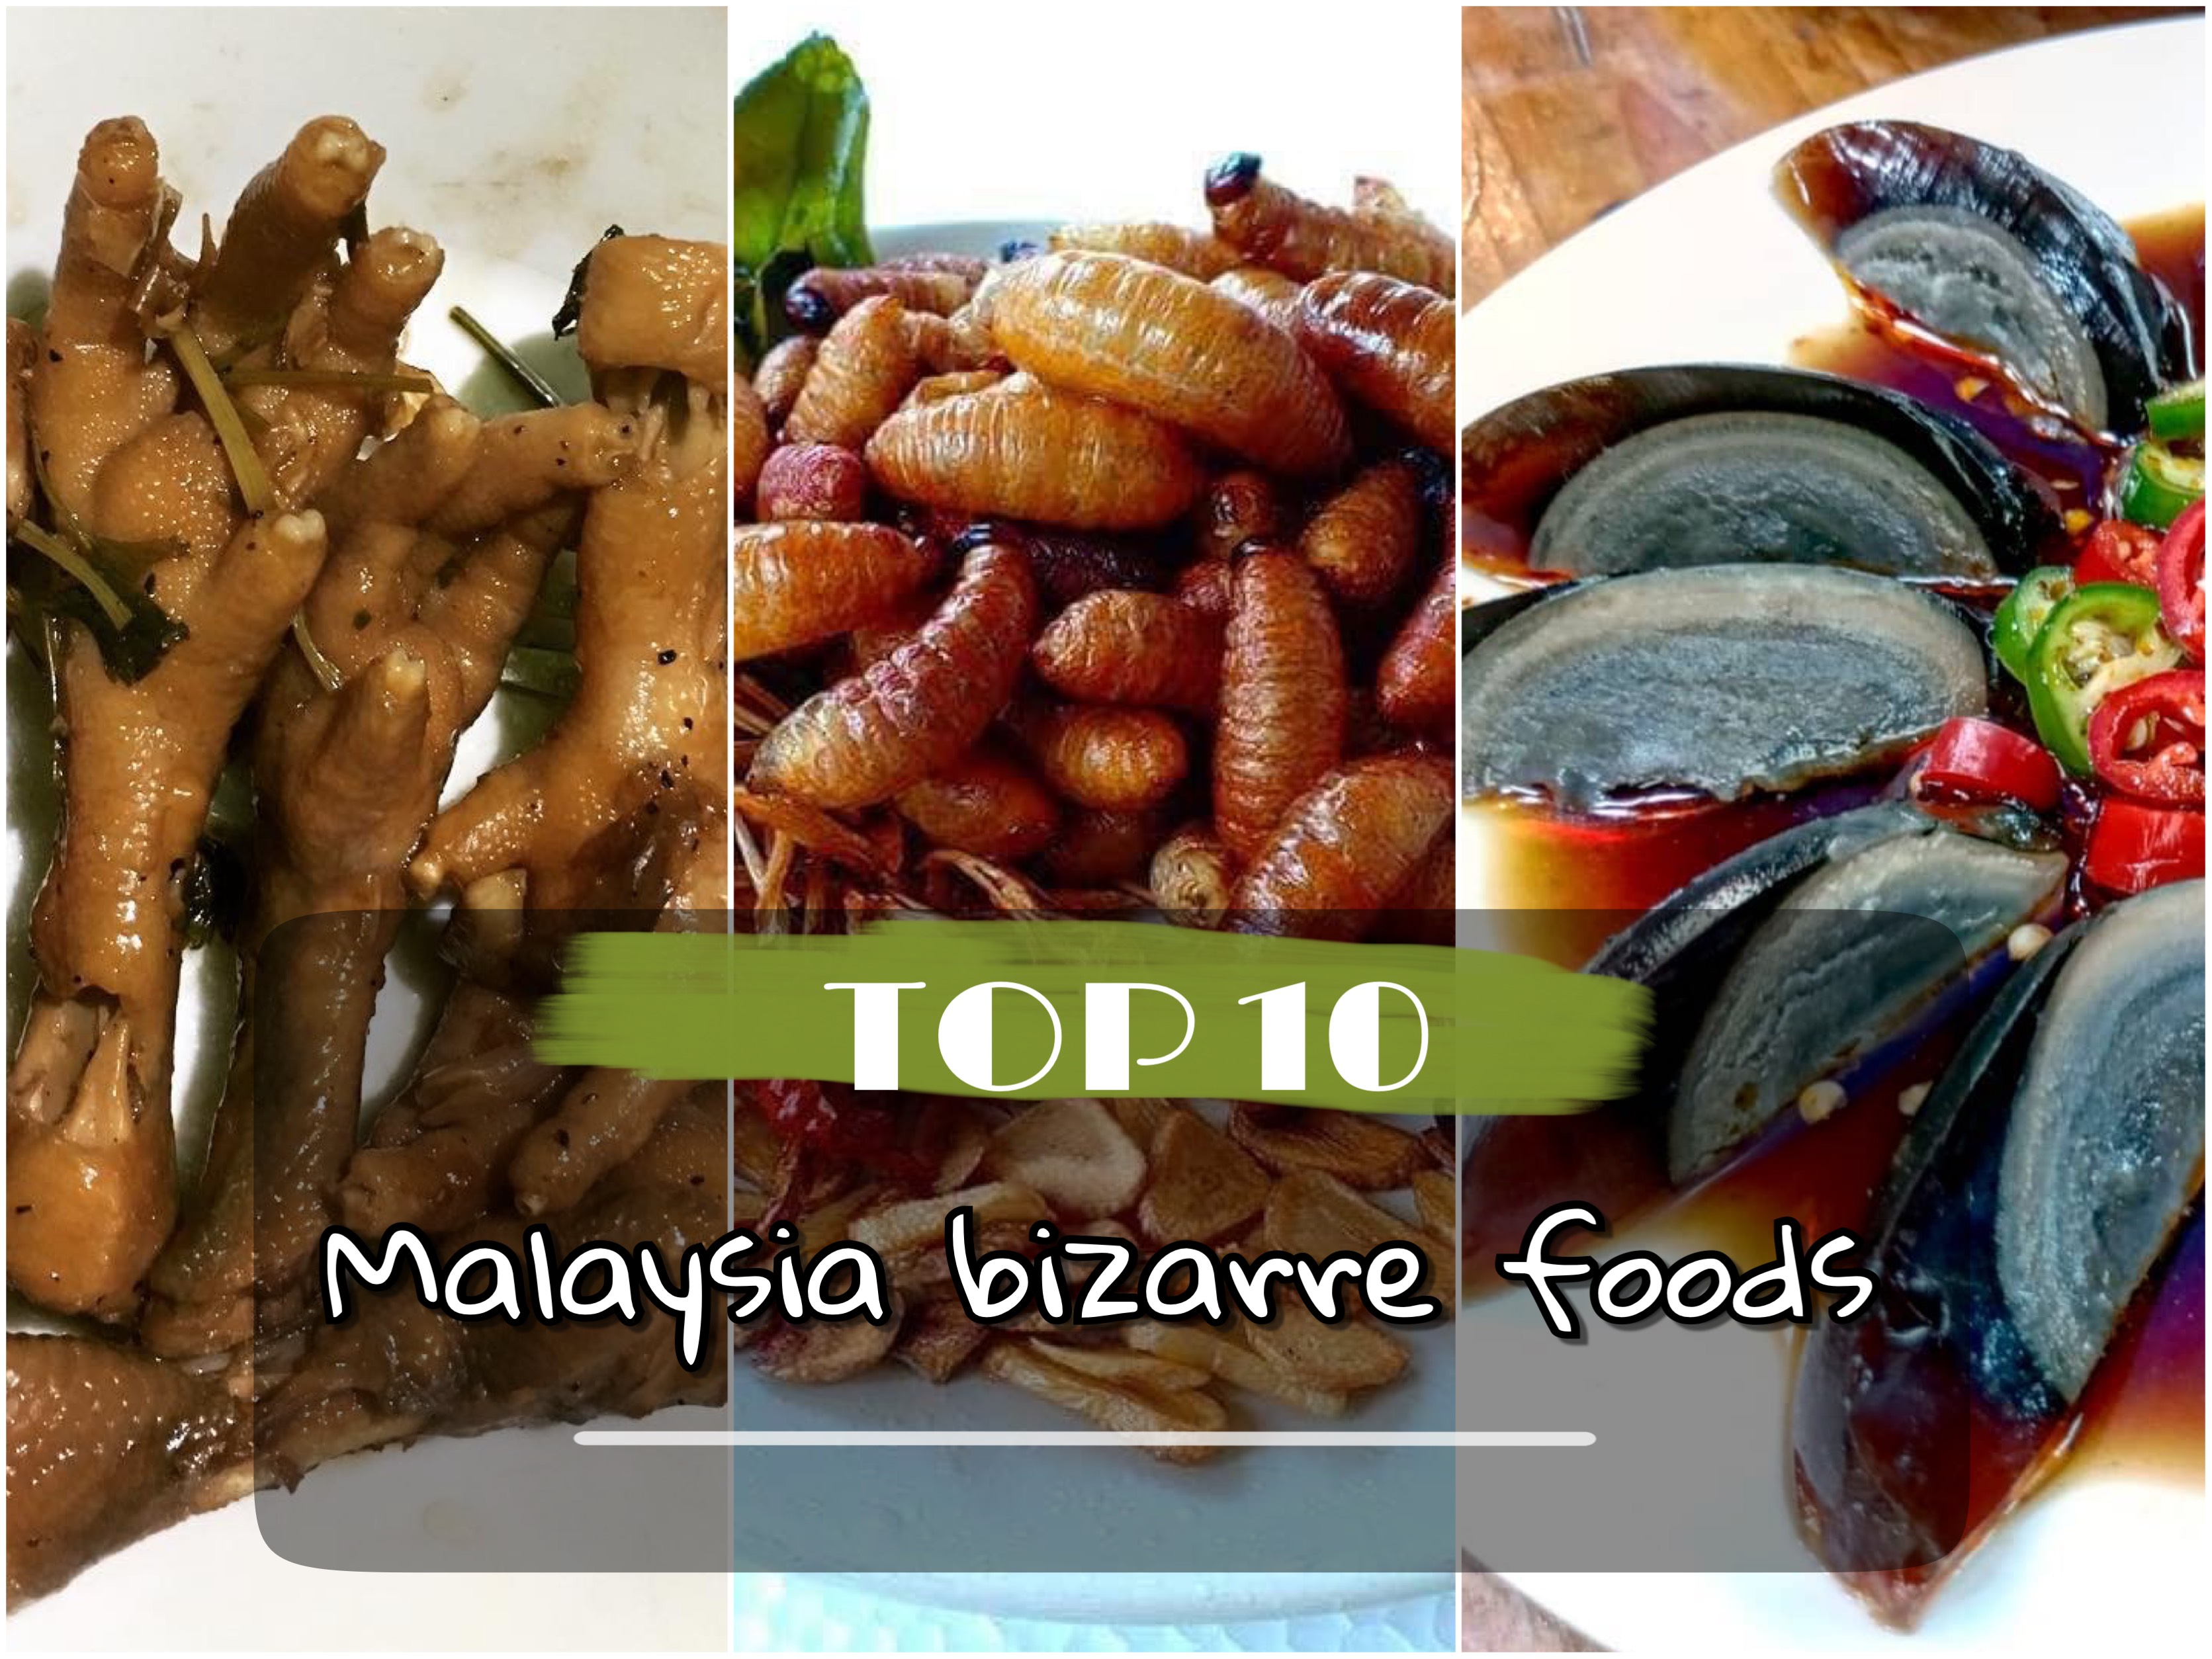 Malaysia Bizarre foods